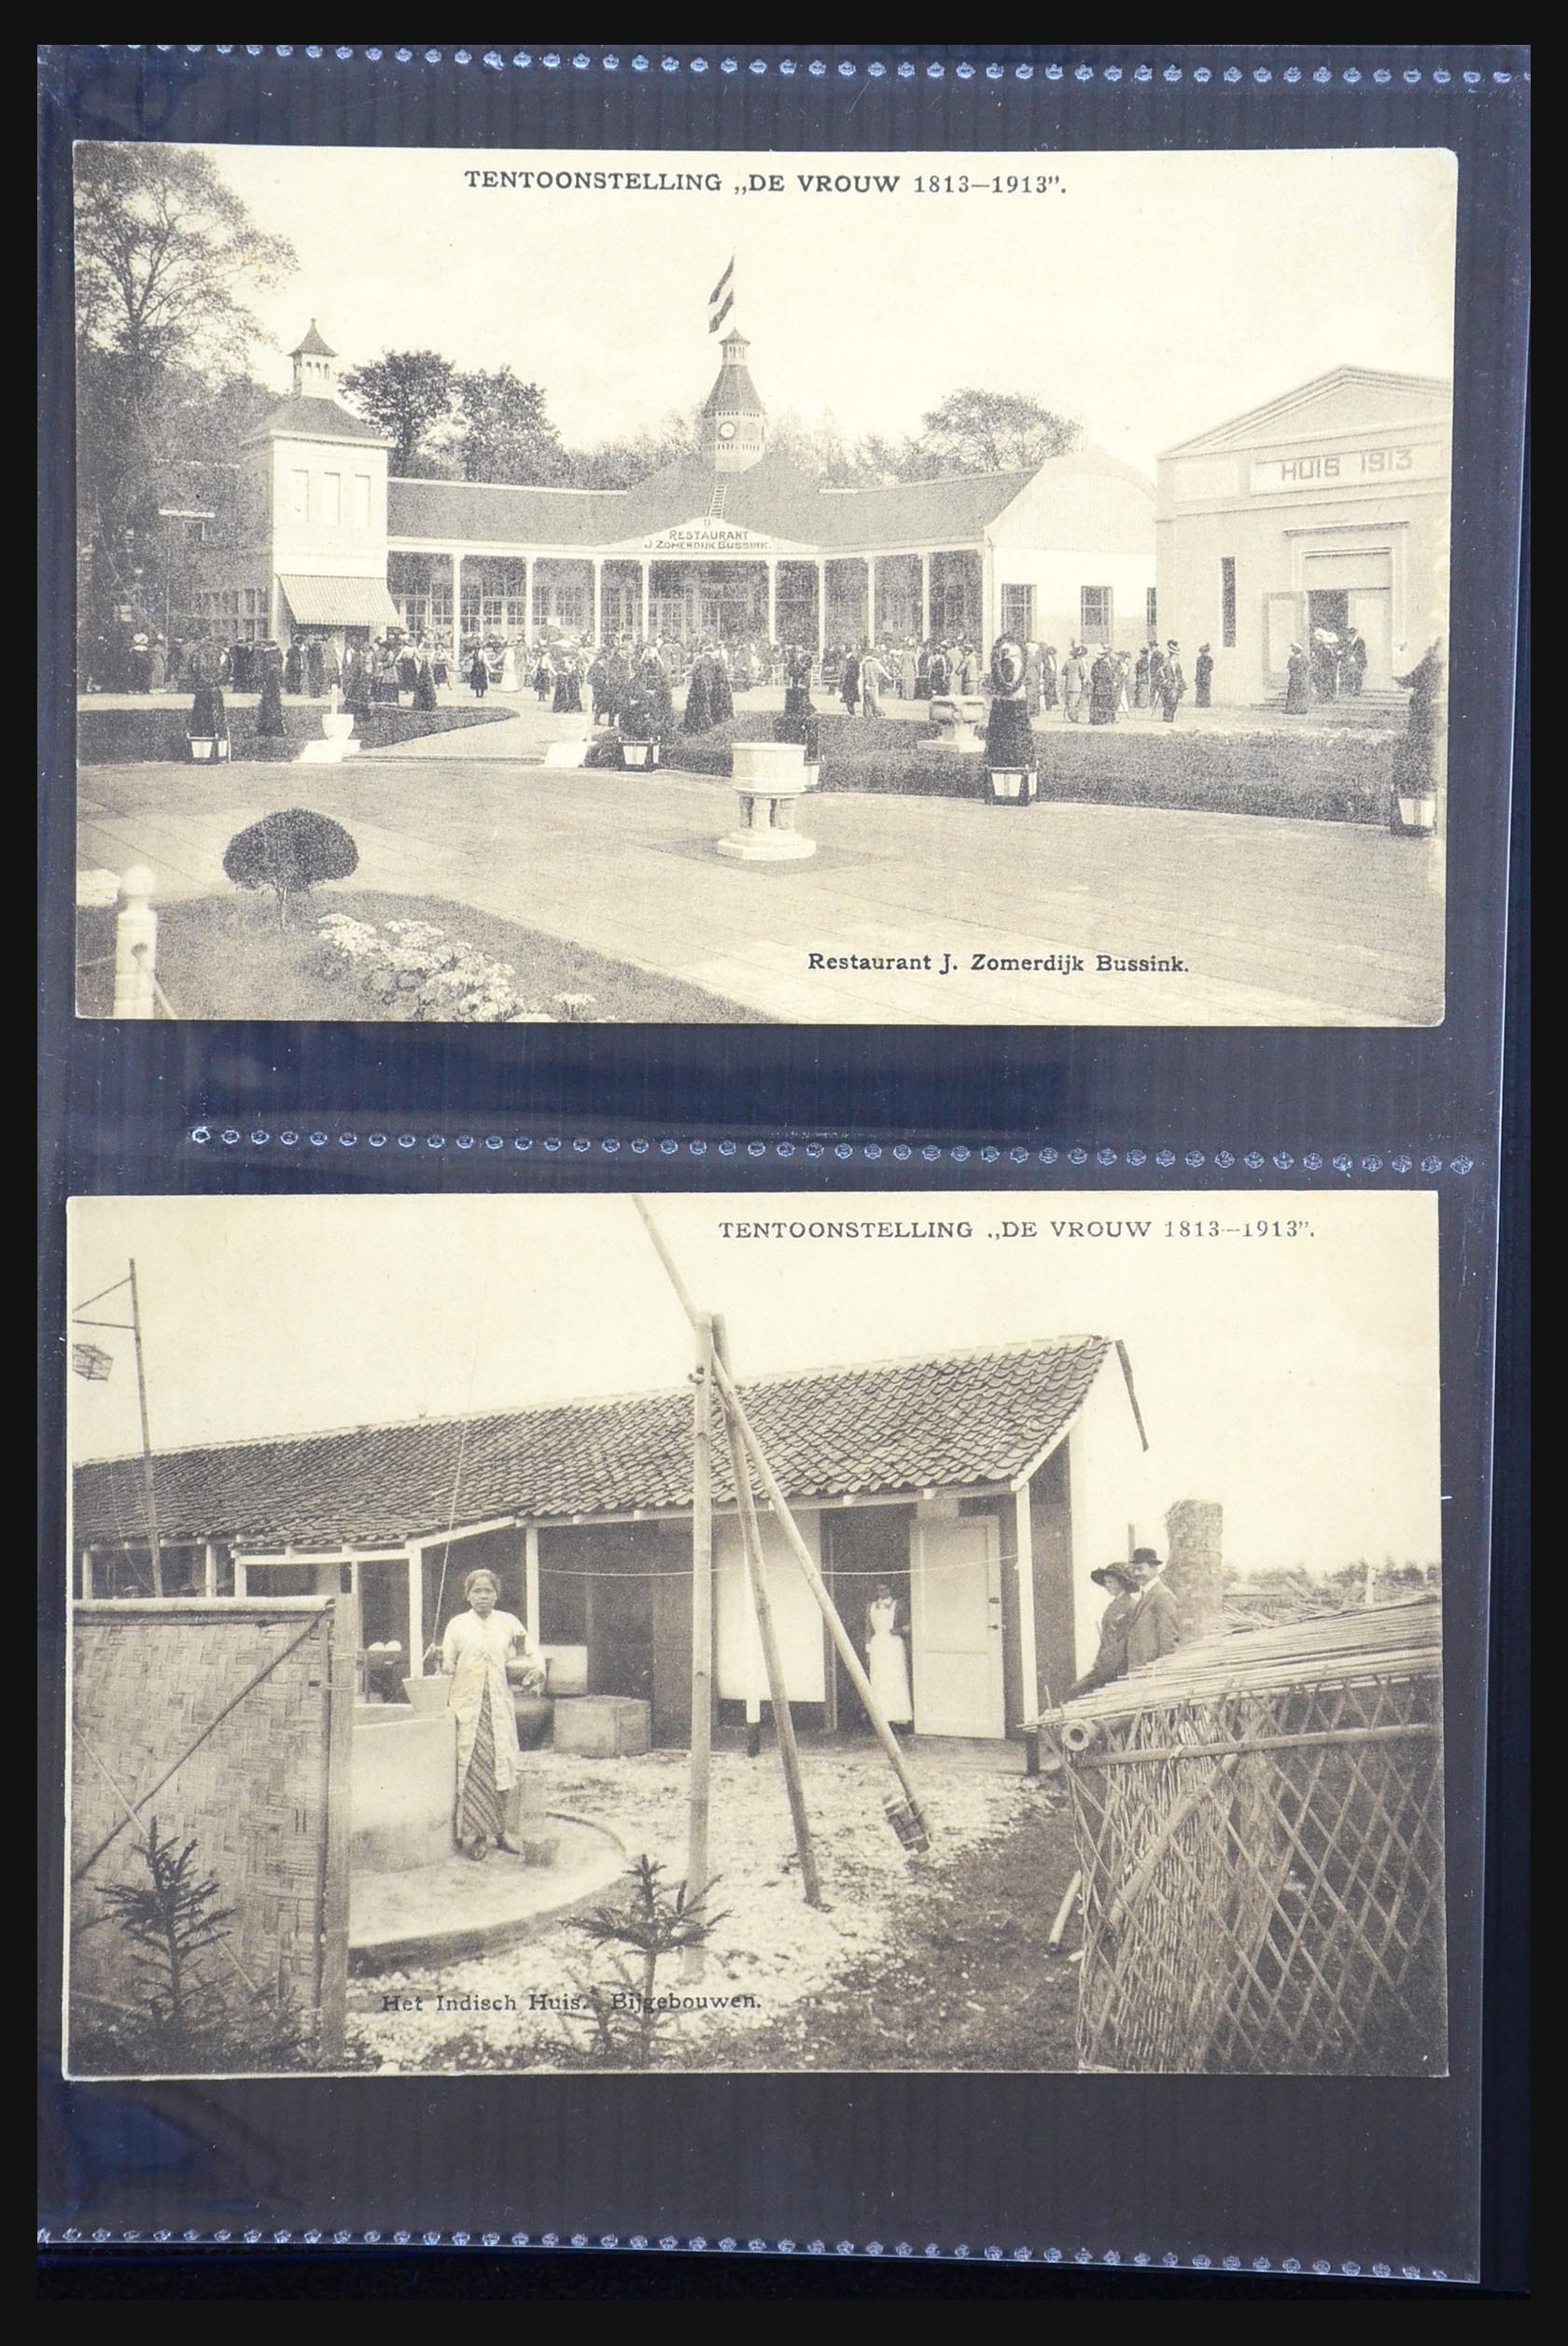 31338 433 - 31338 Netherlands picture postcards 1897-1914.